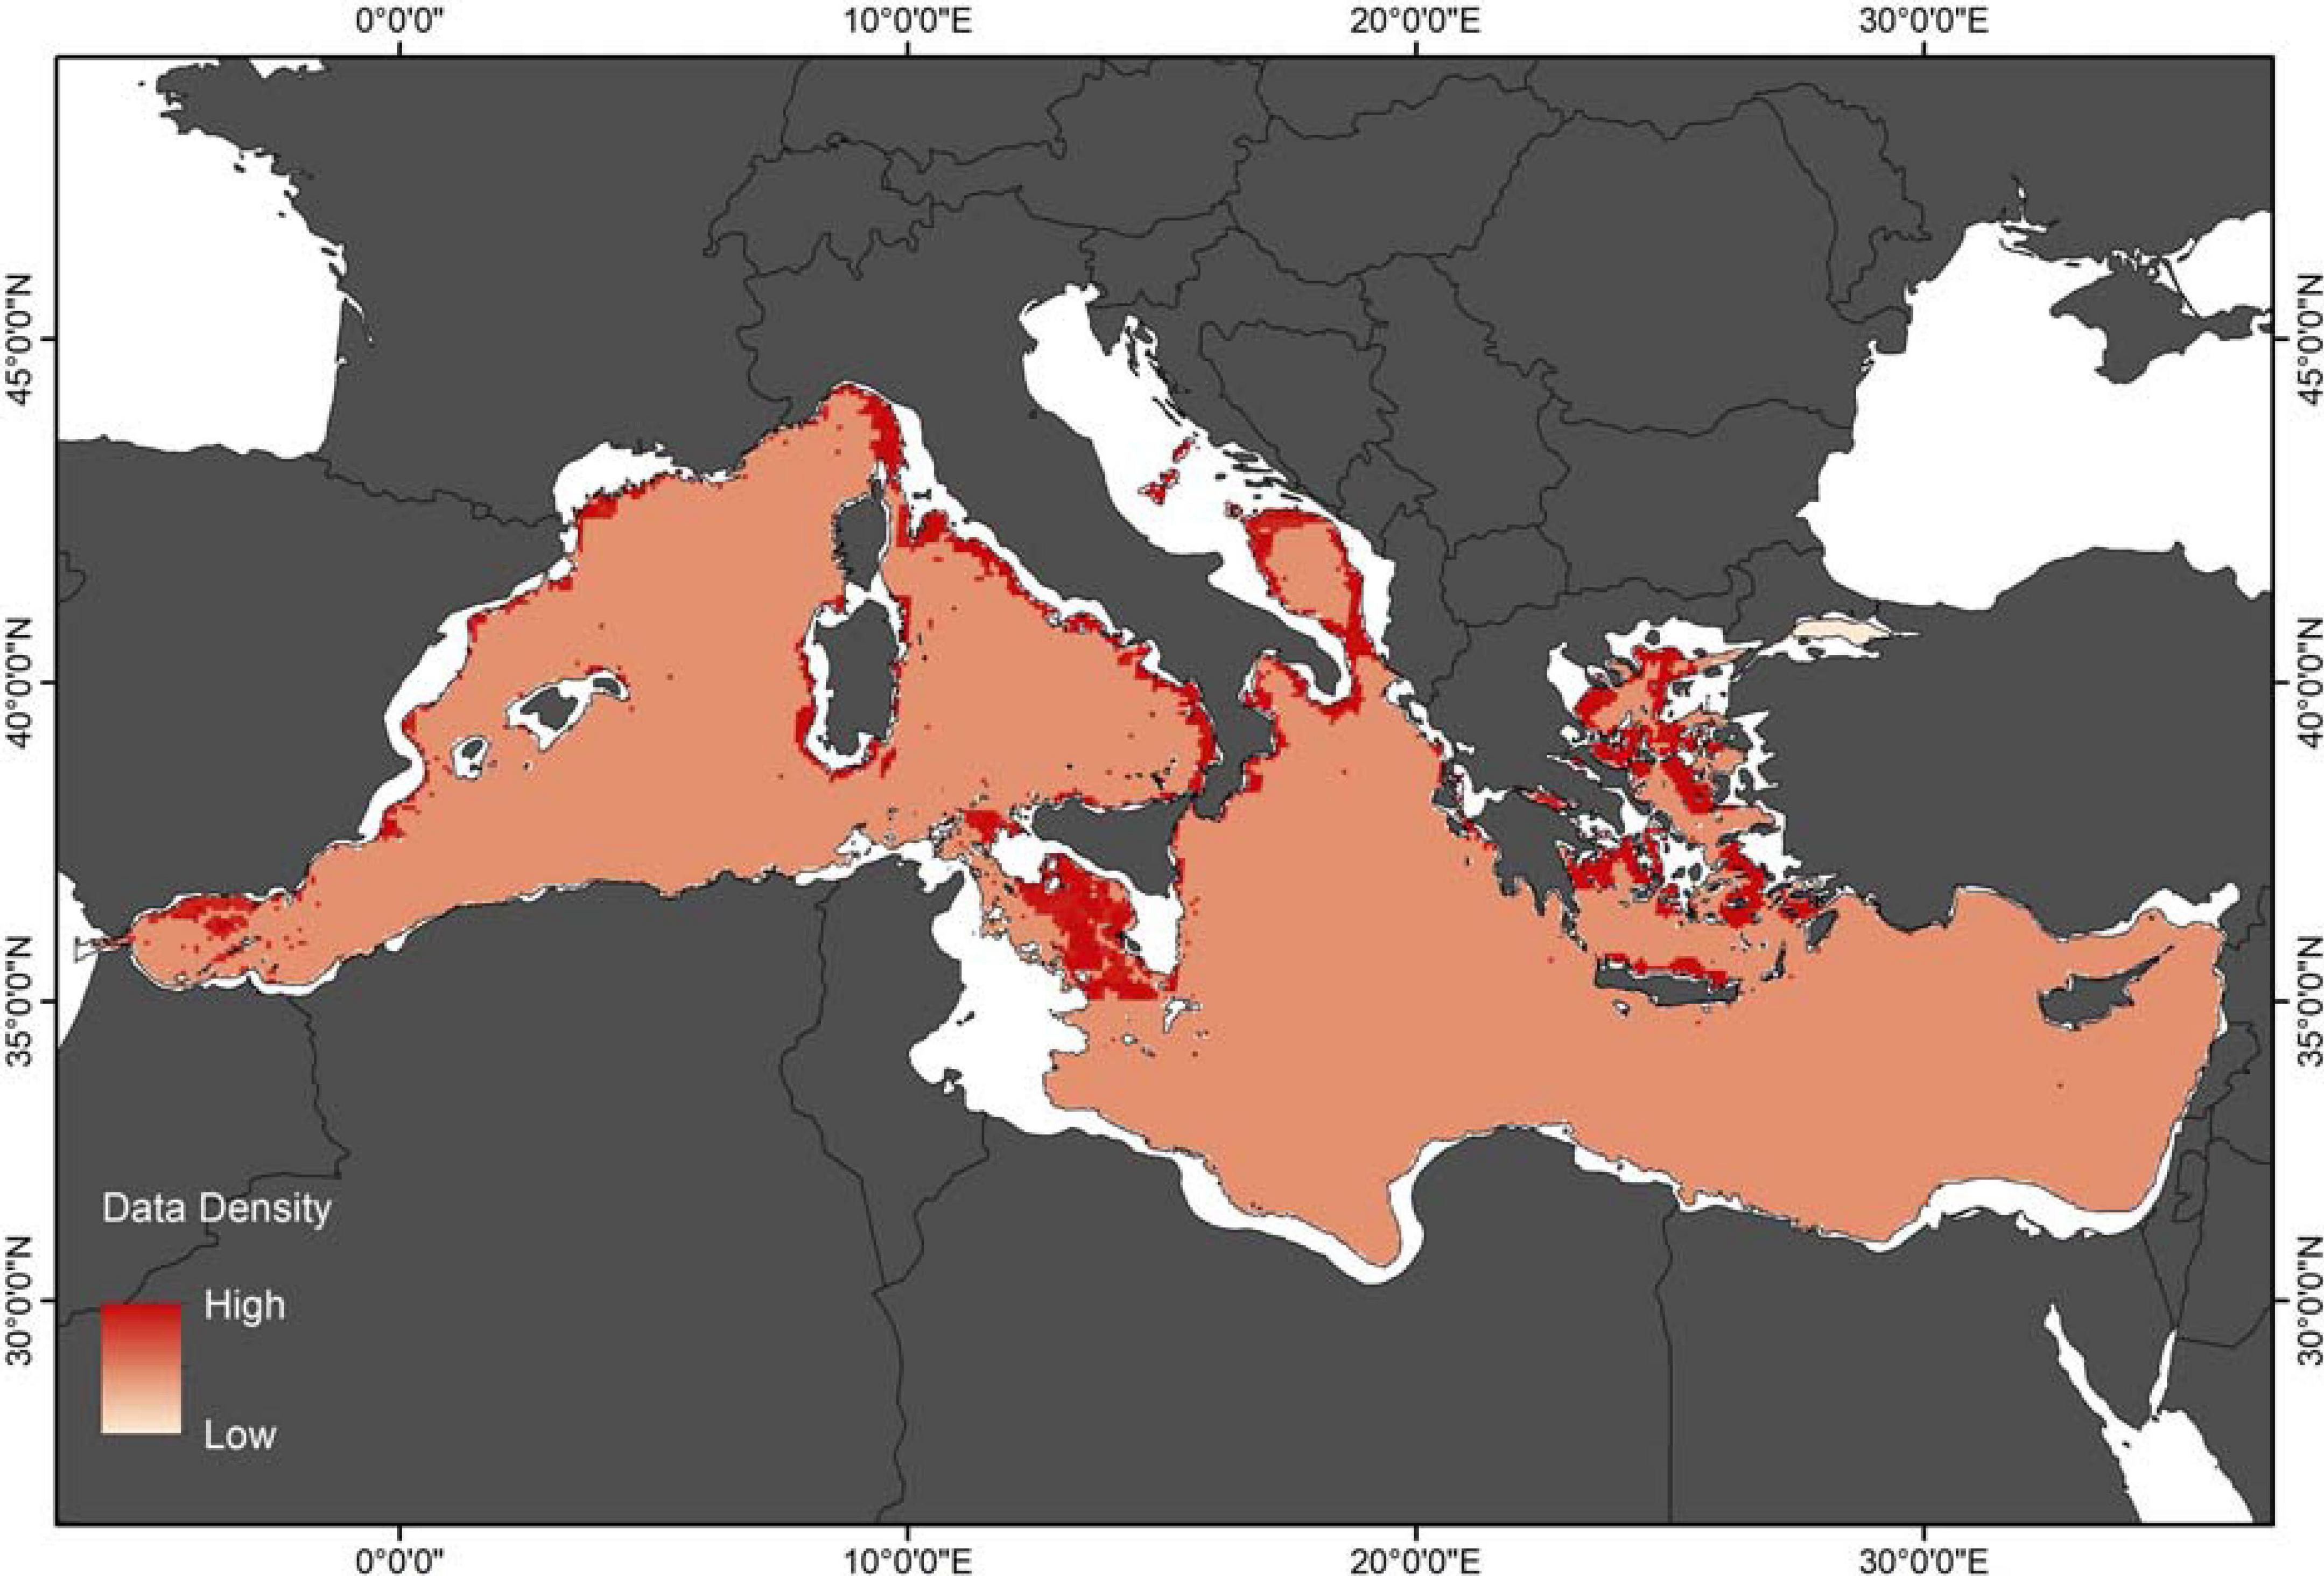 Conserving the Mediterranean Sea